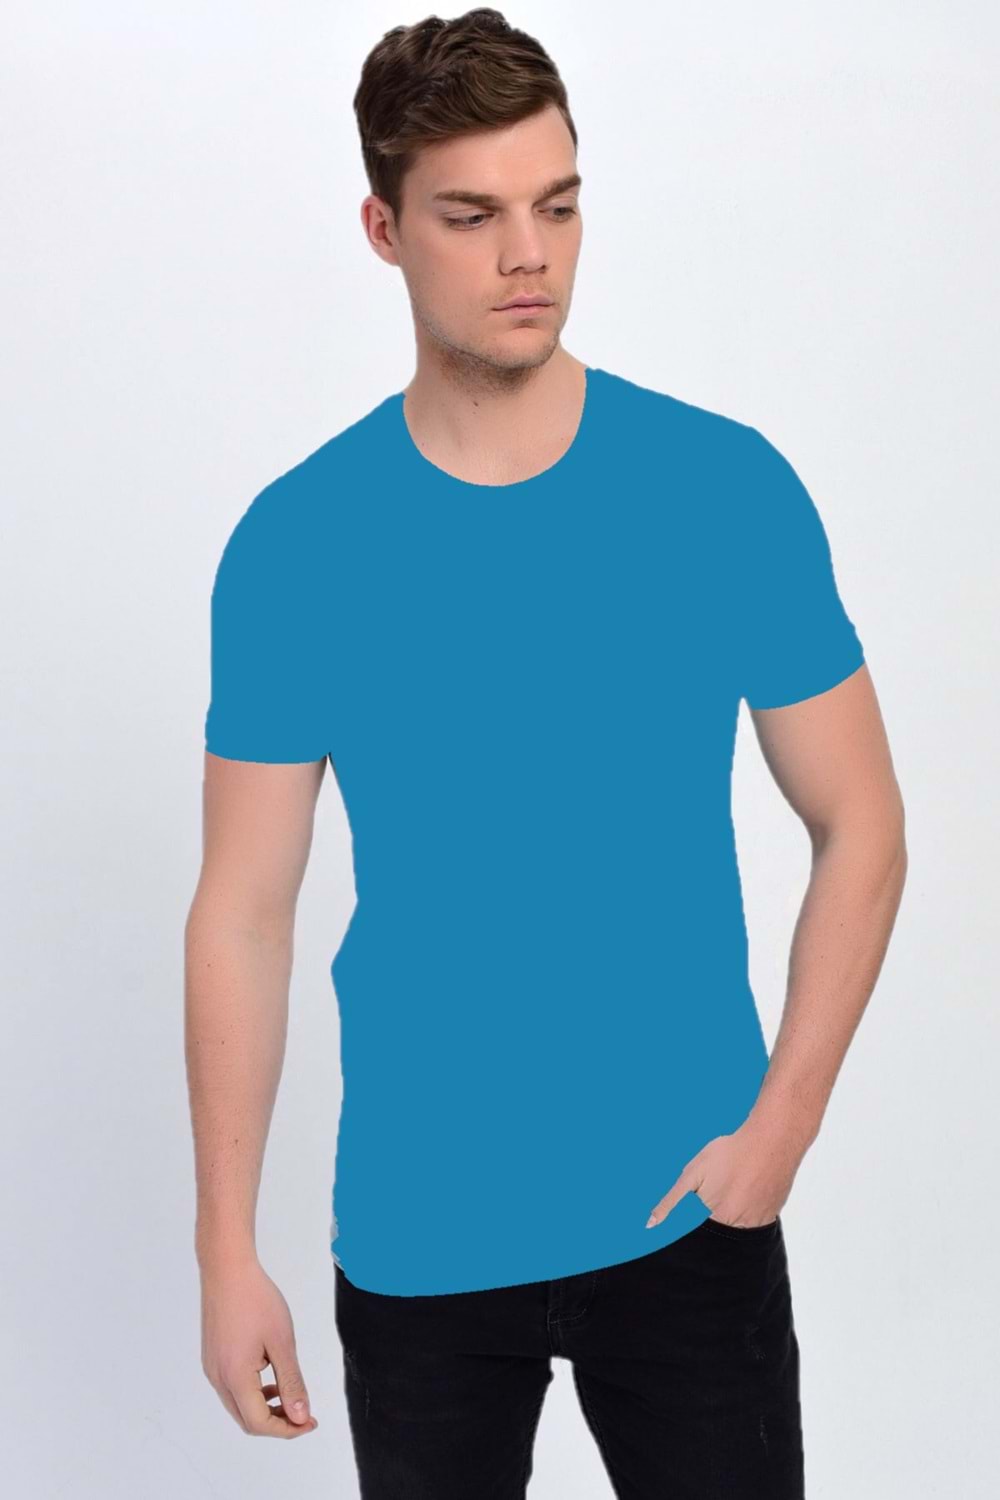 Dynamo Erkek Basic Likralı T-shirt - T338 - - T-338 - Safir Mavi - XL